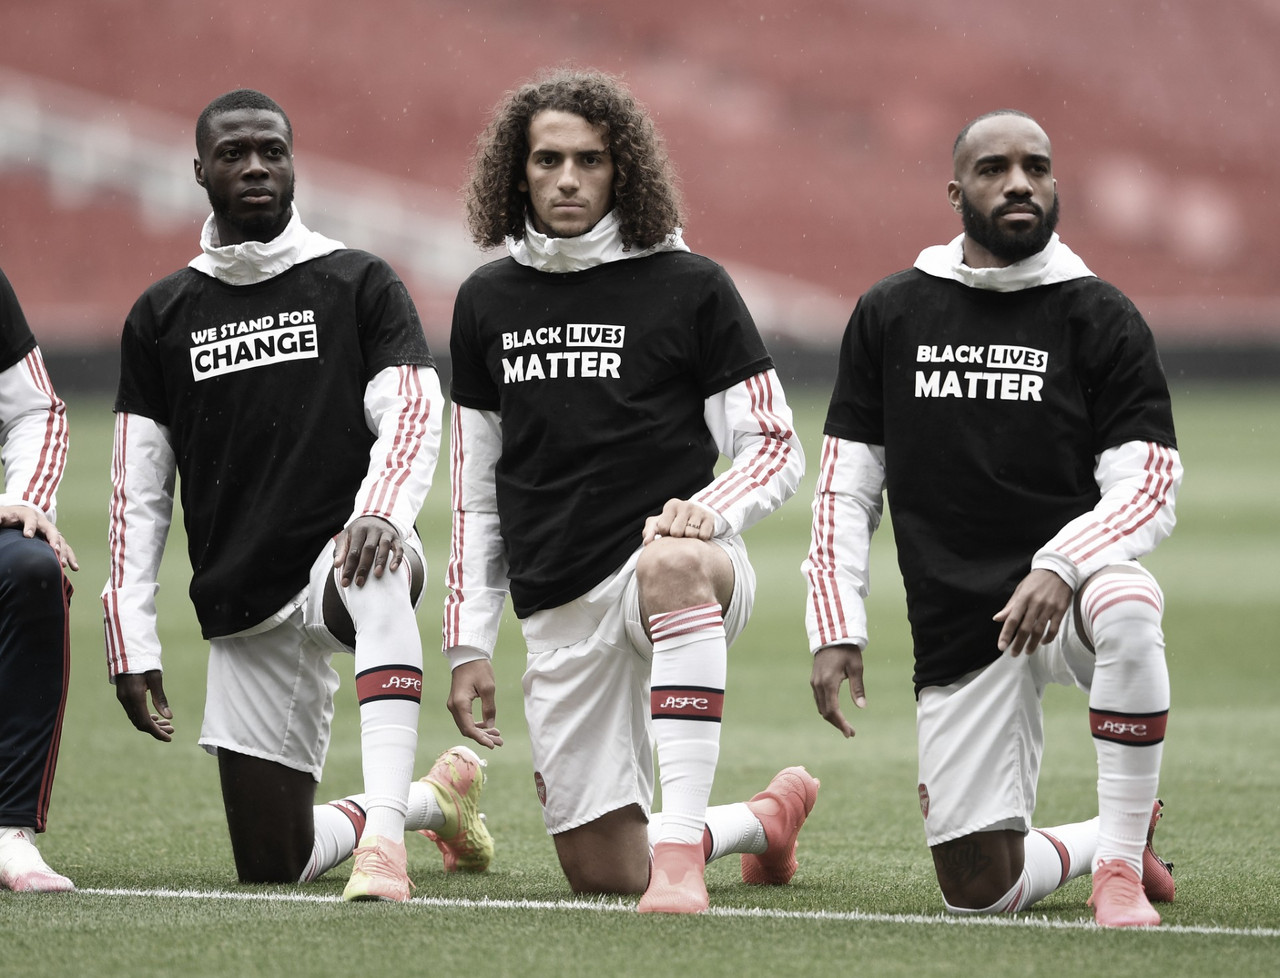 Frase 'Black Lives Matter' vai substituir nomes nas camisas dos jogadores da Premier League